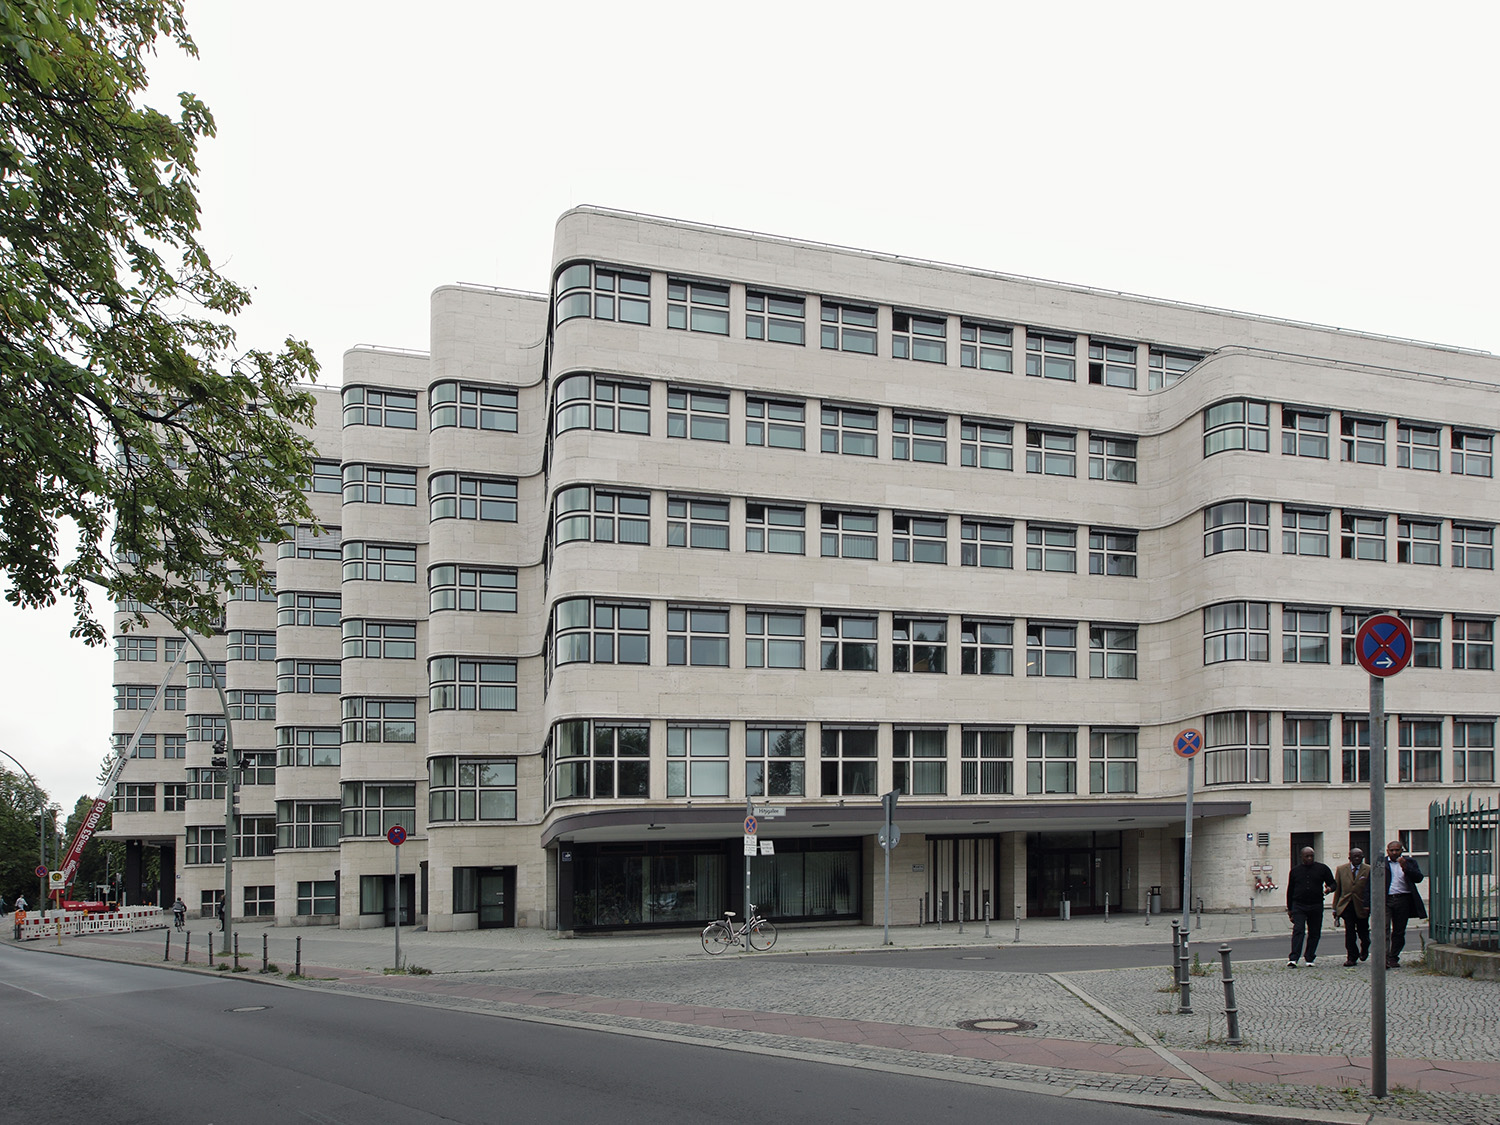 Shell-Haus
Emil Fahrenkamp, 1930–31
Berlin